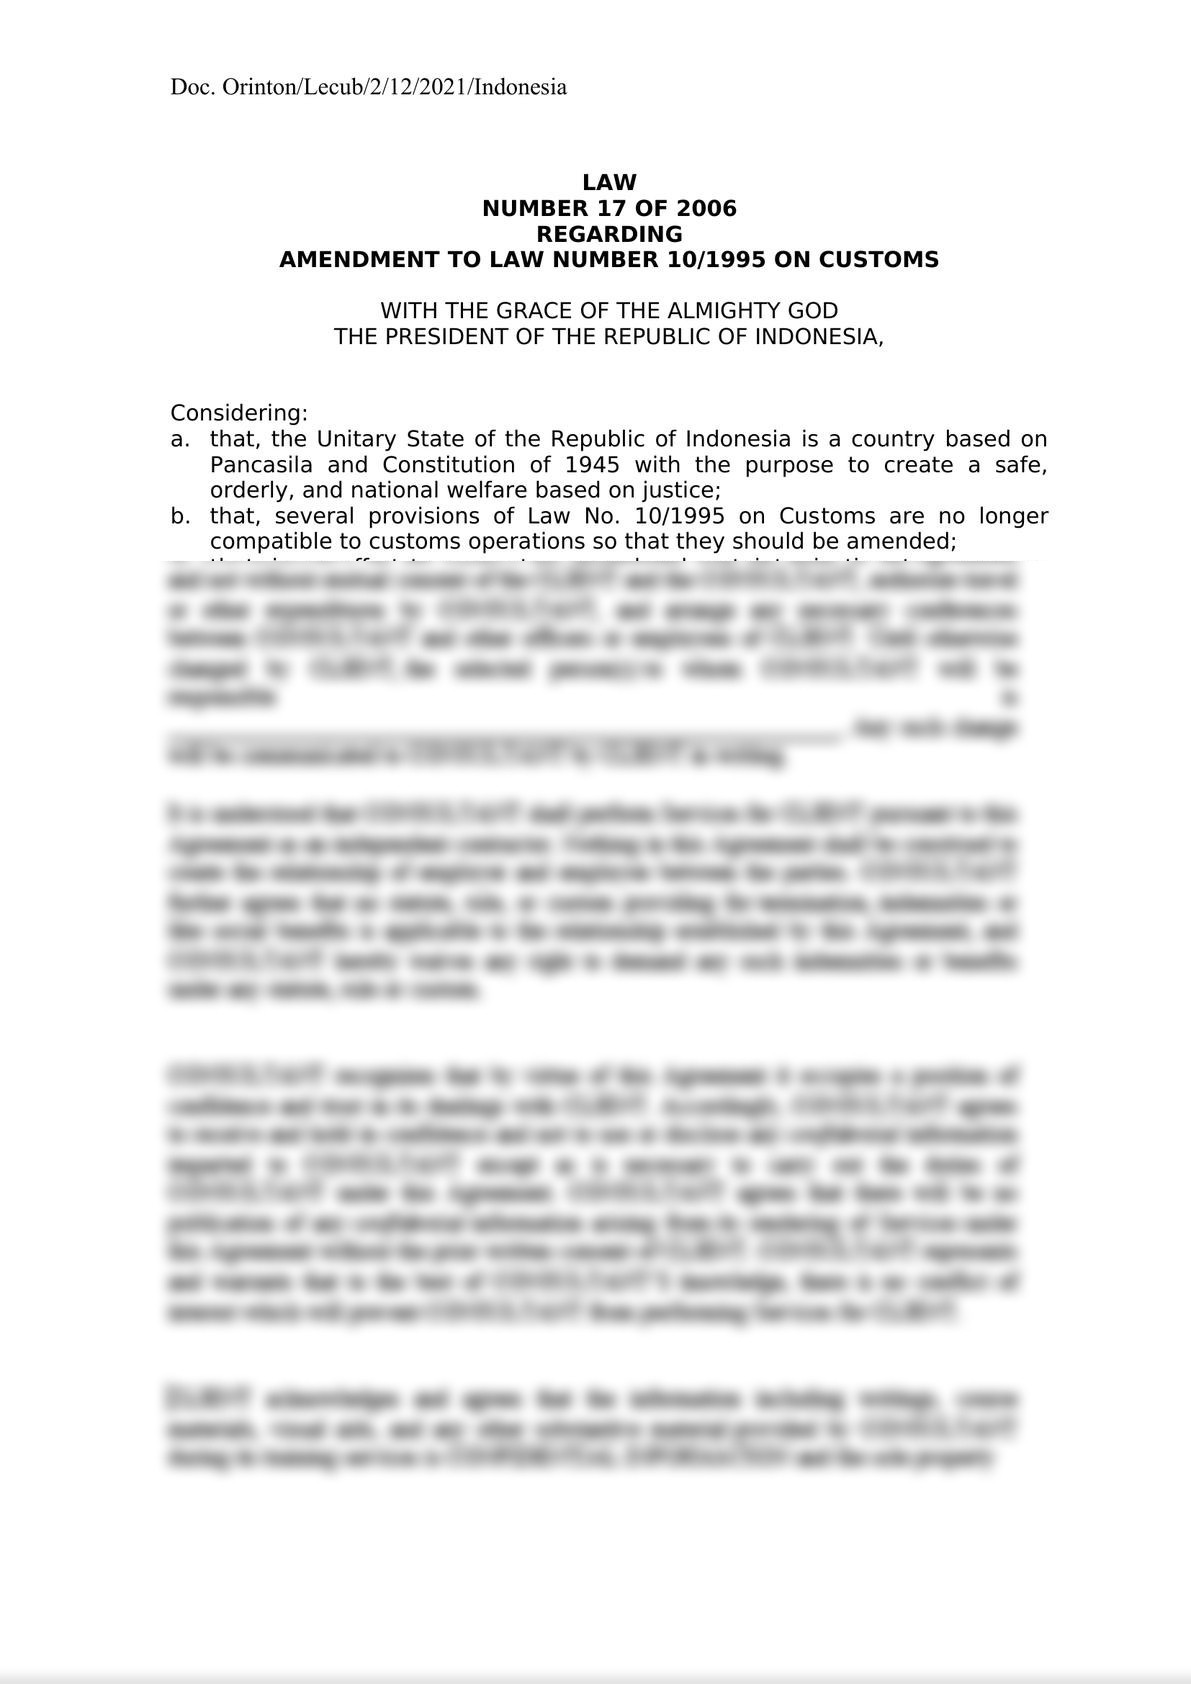 Indonesia Law 17 of 2006 Regarding Amendment to Law 10/1995 on Customs-0